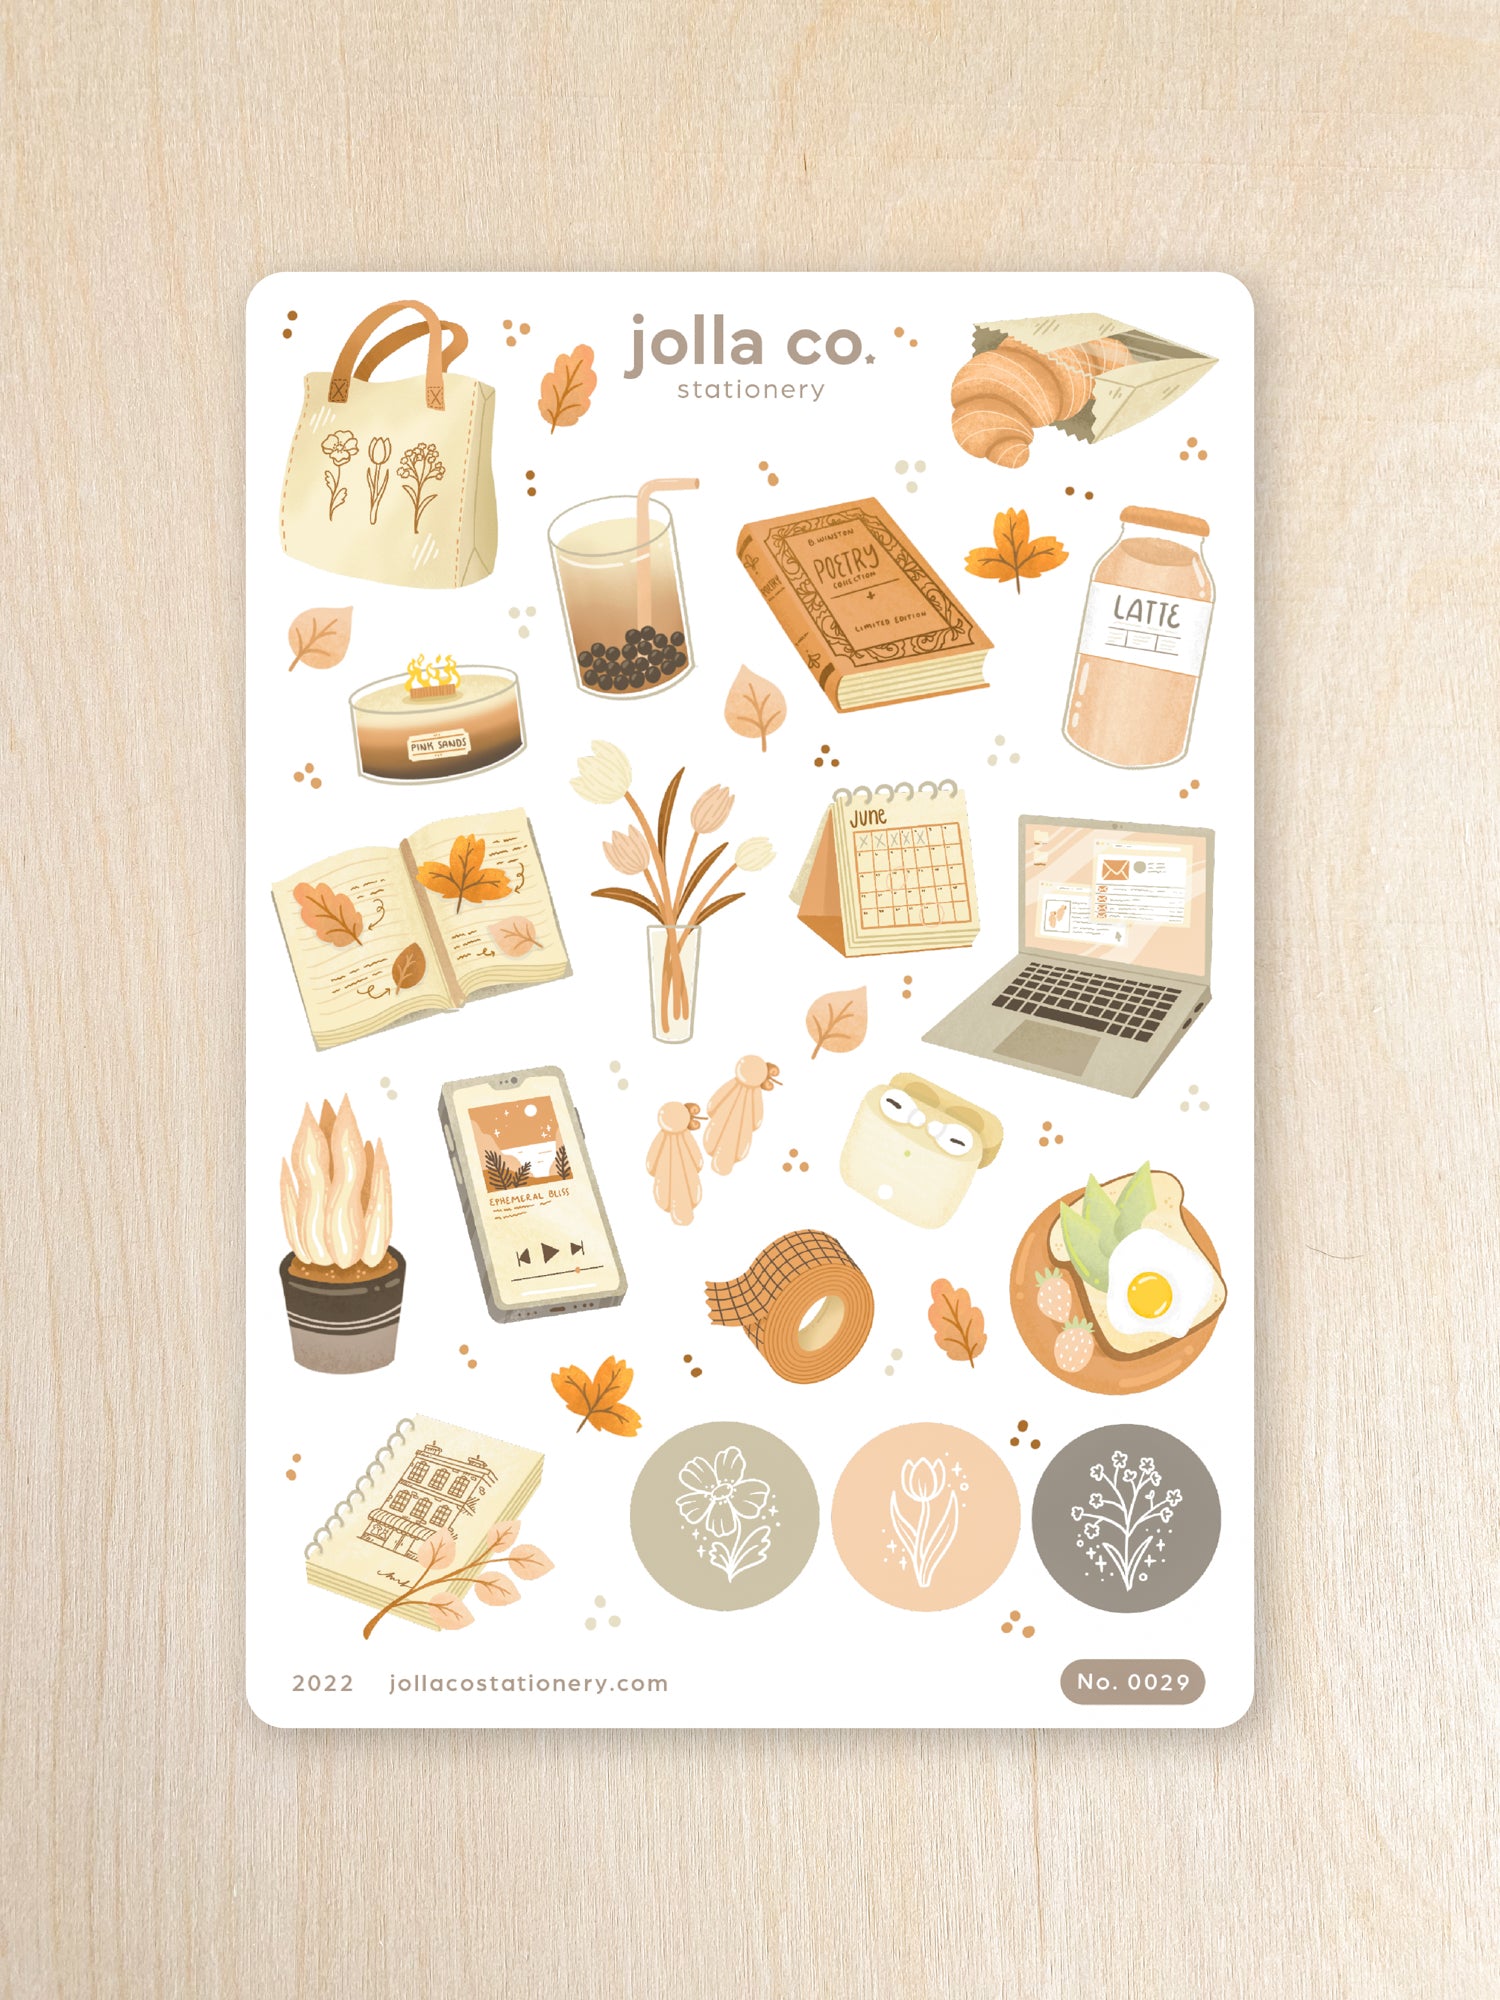 Chill & Cute Aesthetic Sticker Sheet